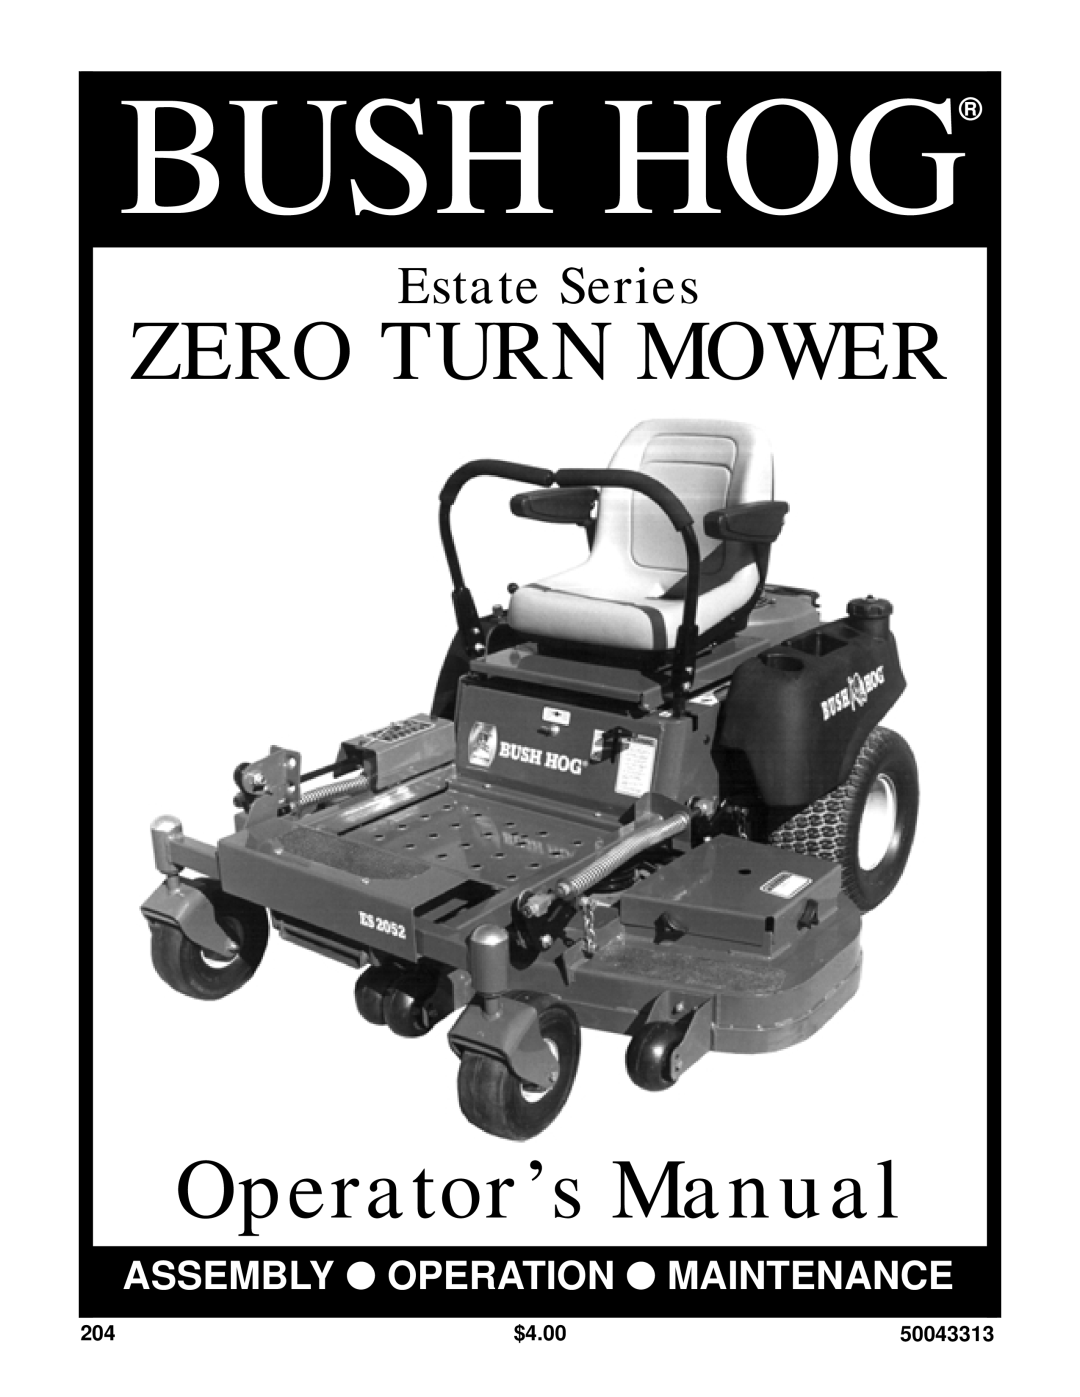 Bush Hog Estate Series manual $4.00, 50043313, Bush Hog, ZERO TURN MOWER Operator’s Manual, Assembly Operation Maintenance 